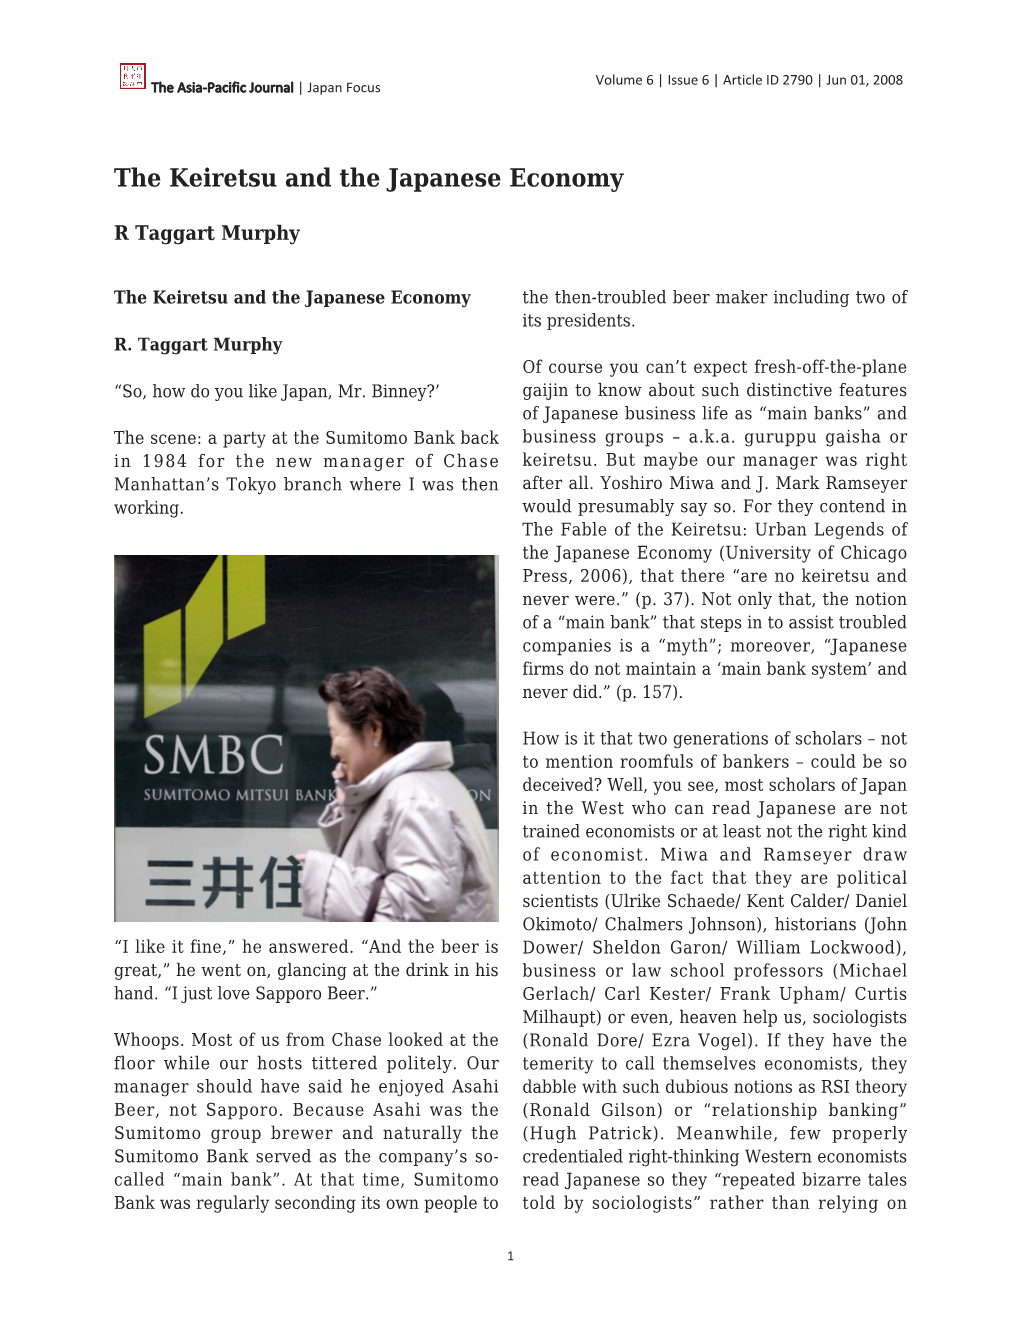 The Keiretsu and the Japanese Economy